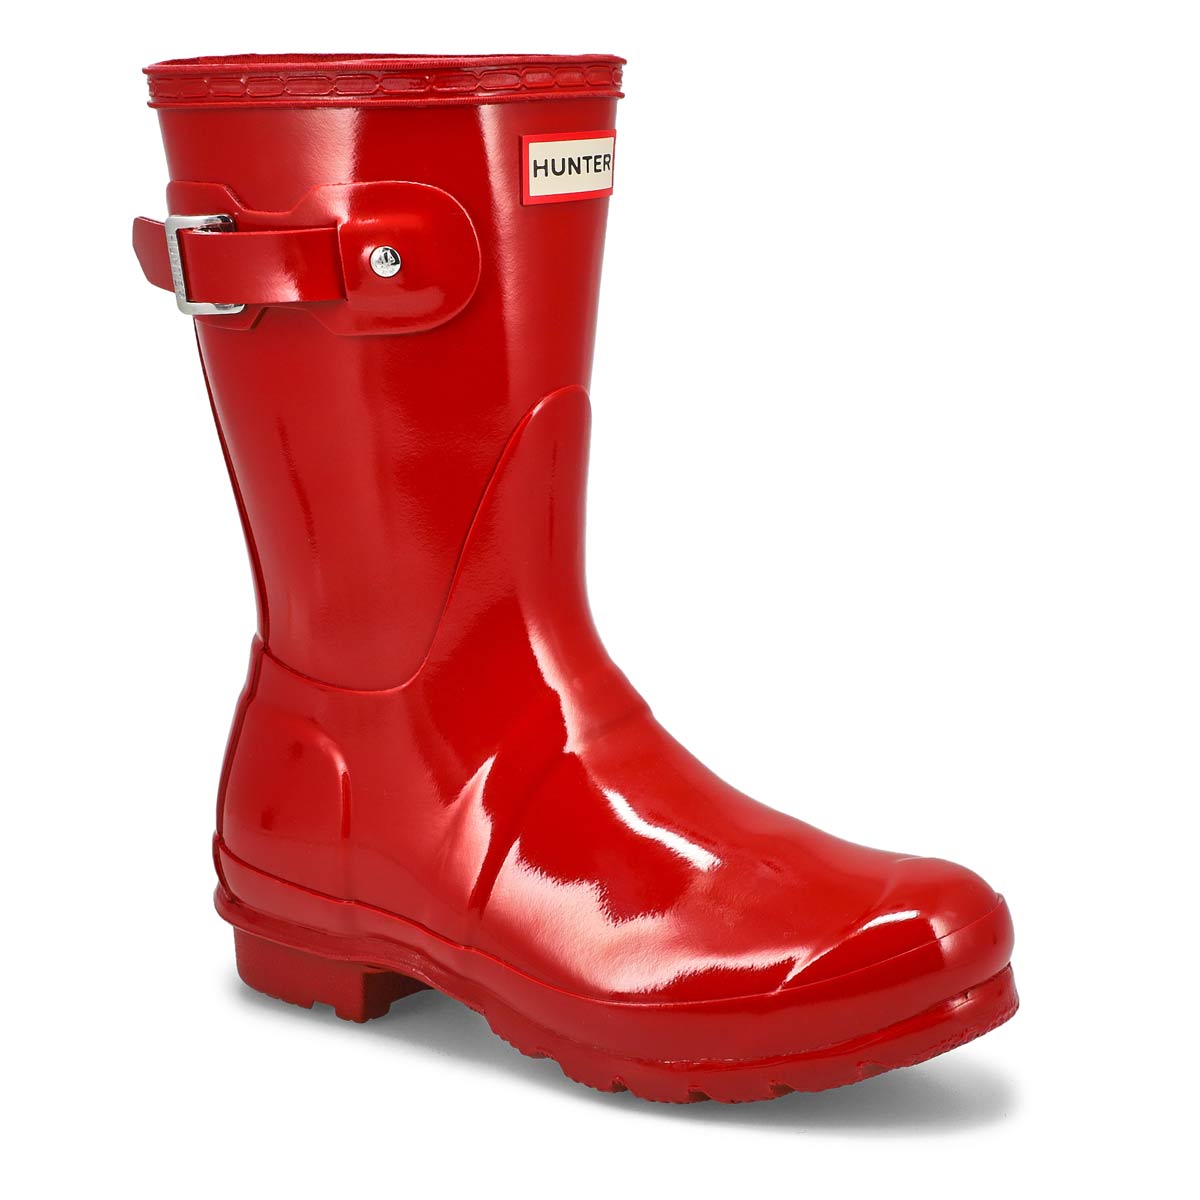 Women's Original Short Gloss Rain Boot - Red